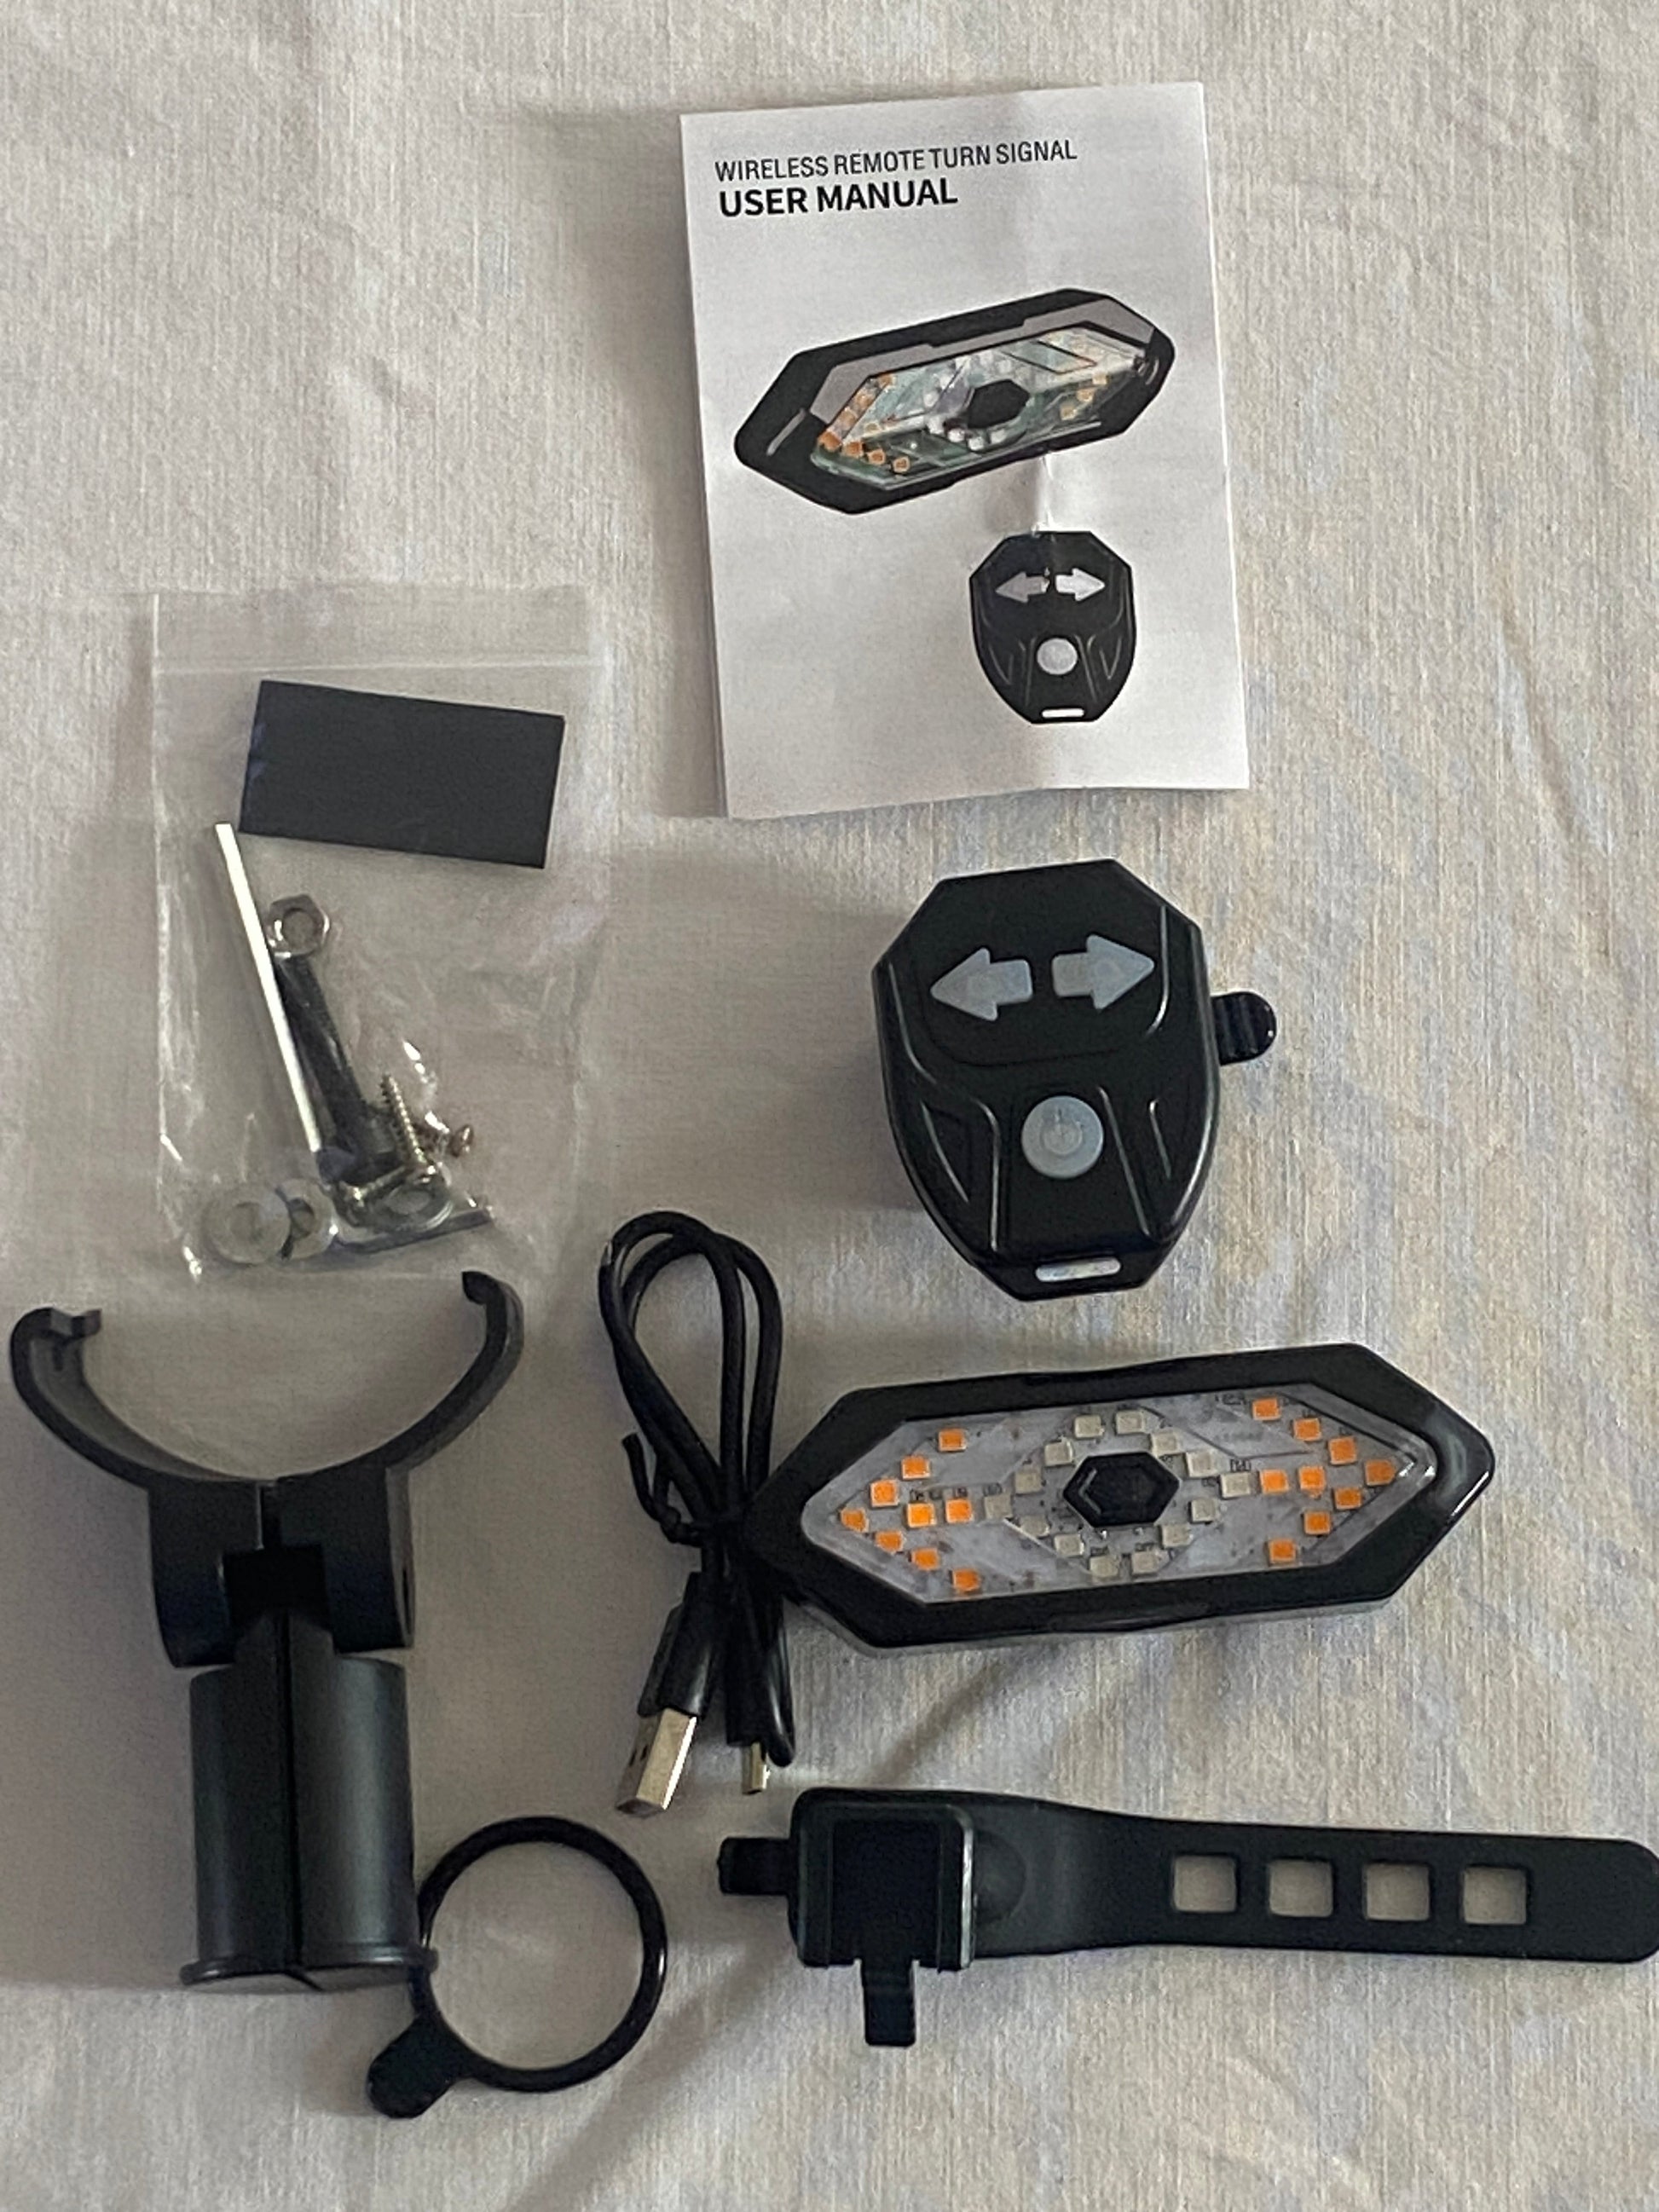 Wireless remote turn signal kit